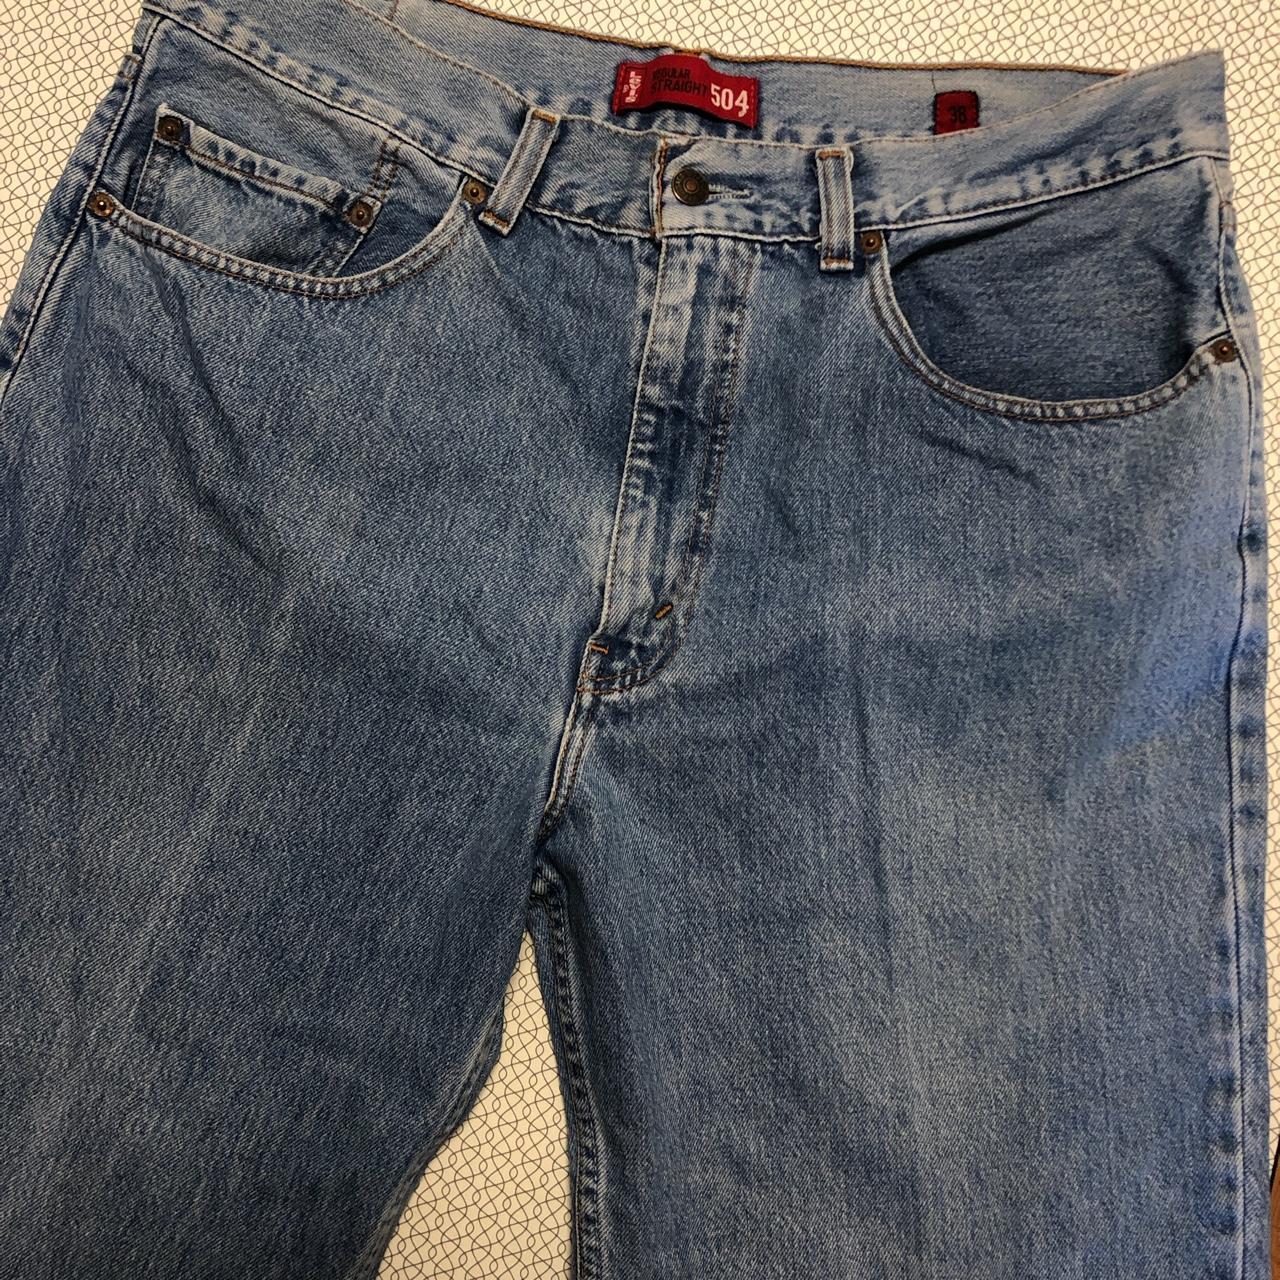 Levi’s 504 faded light blue jeans, regular straight... - Depop